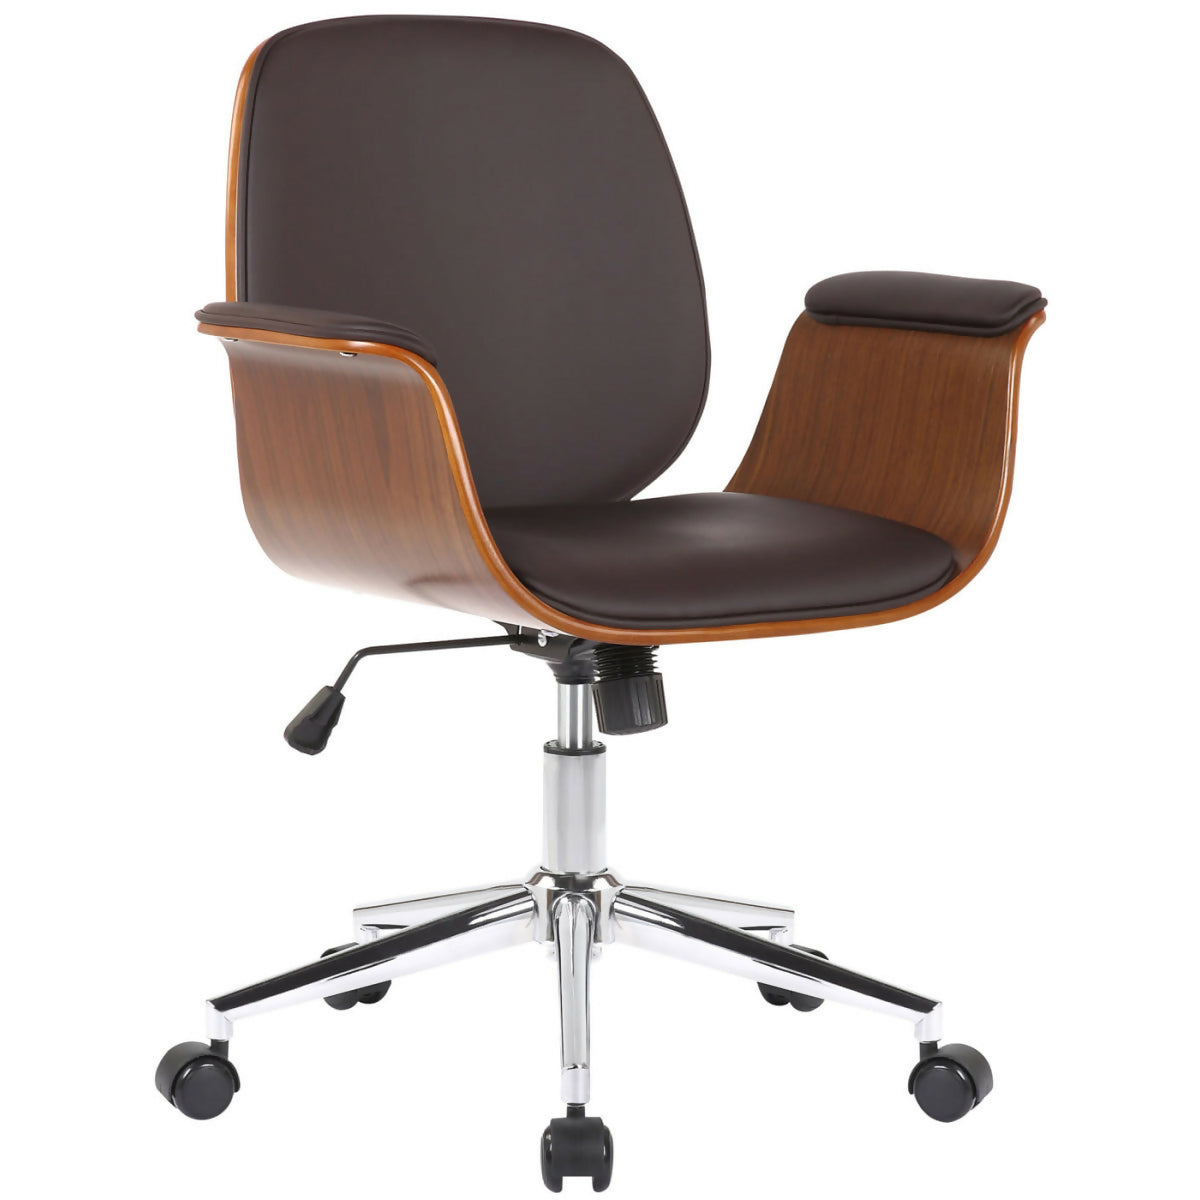 Kemberg office armchair - Walnut - Brown